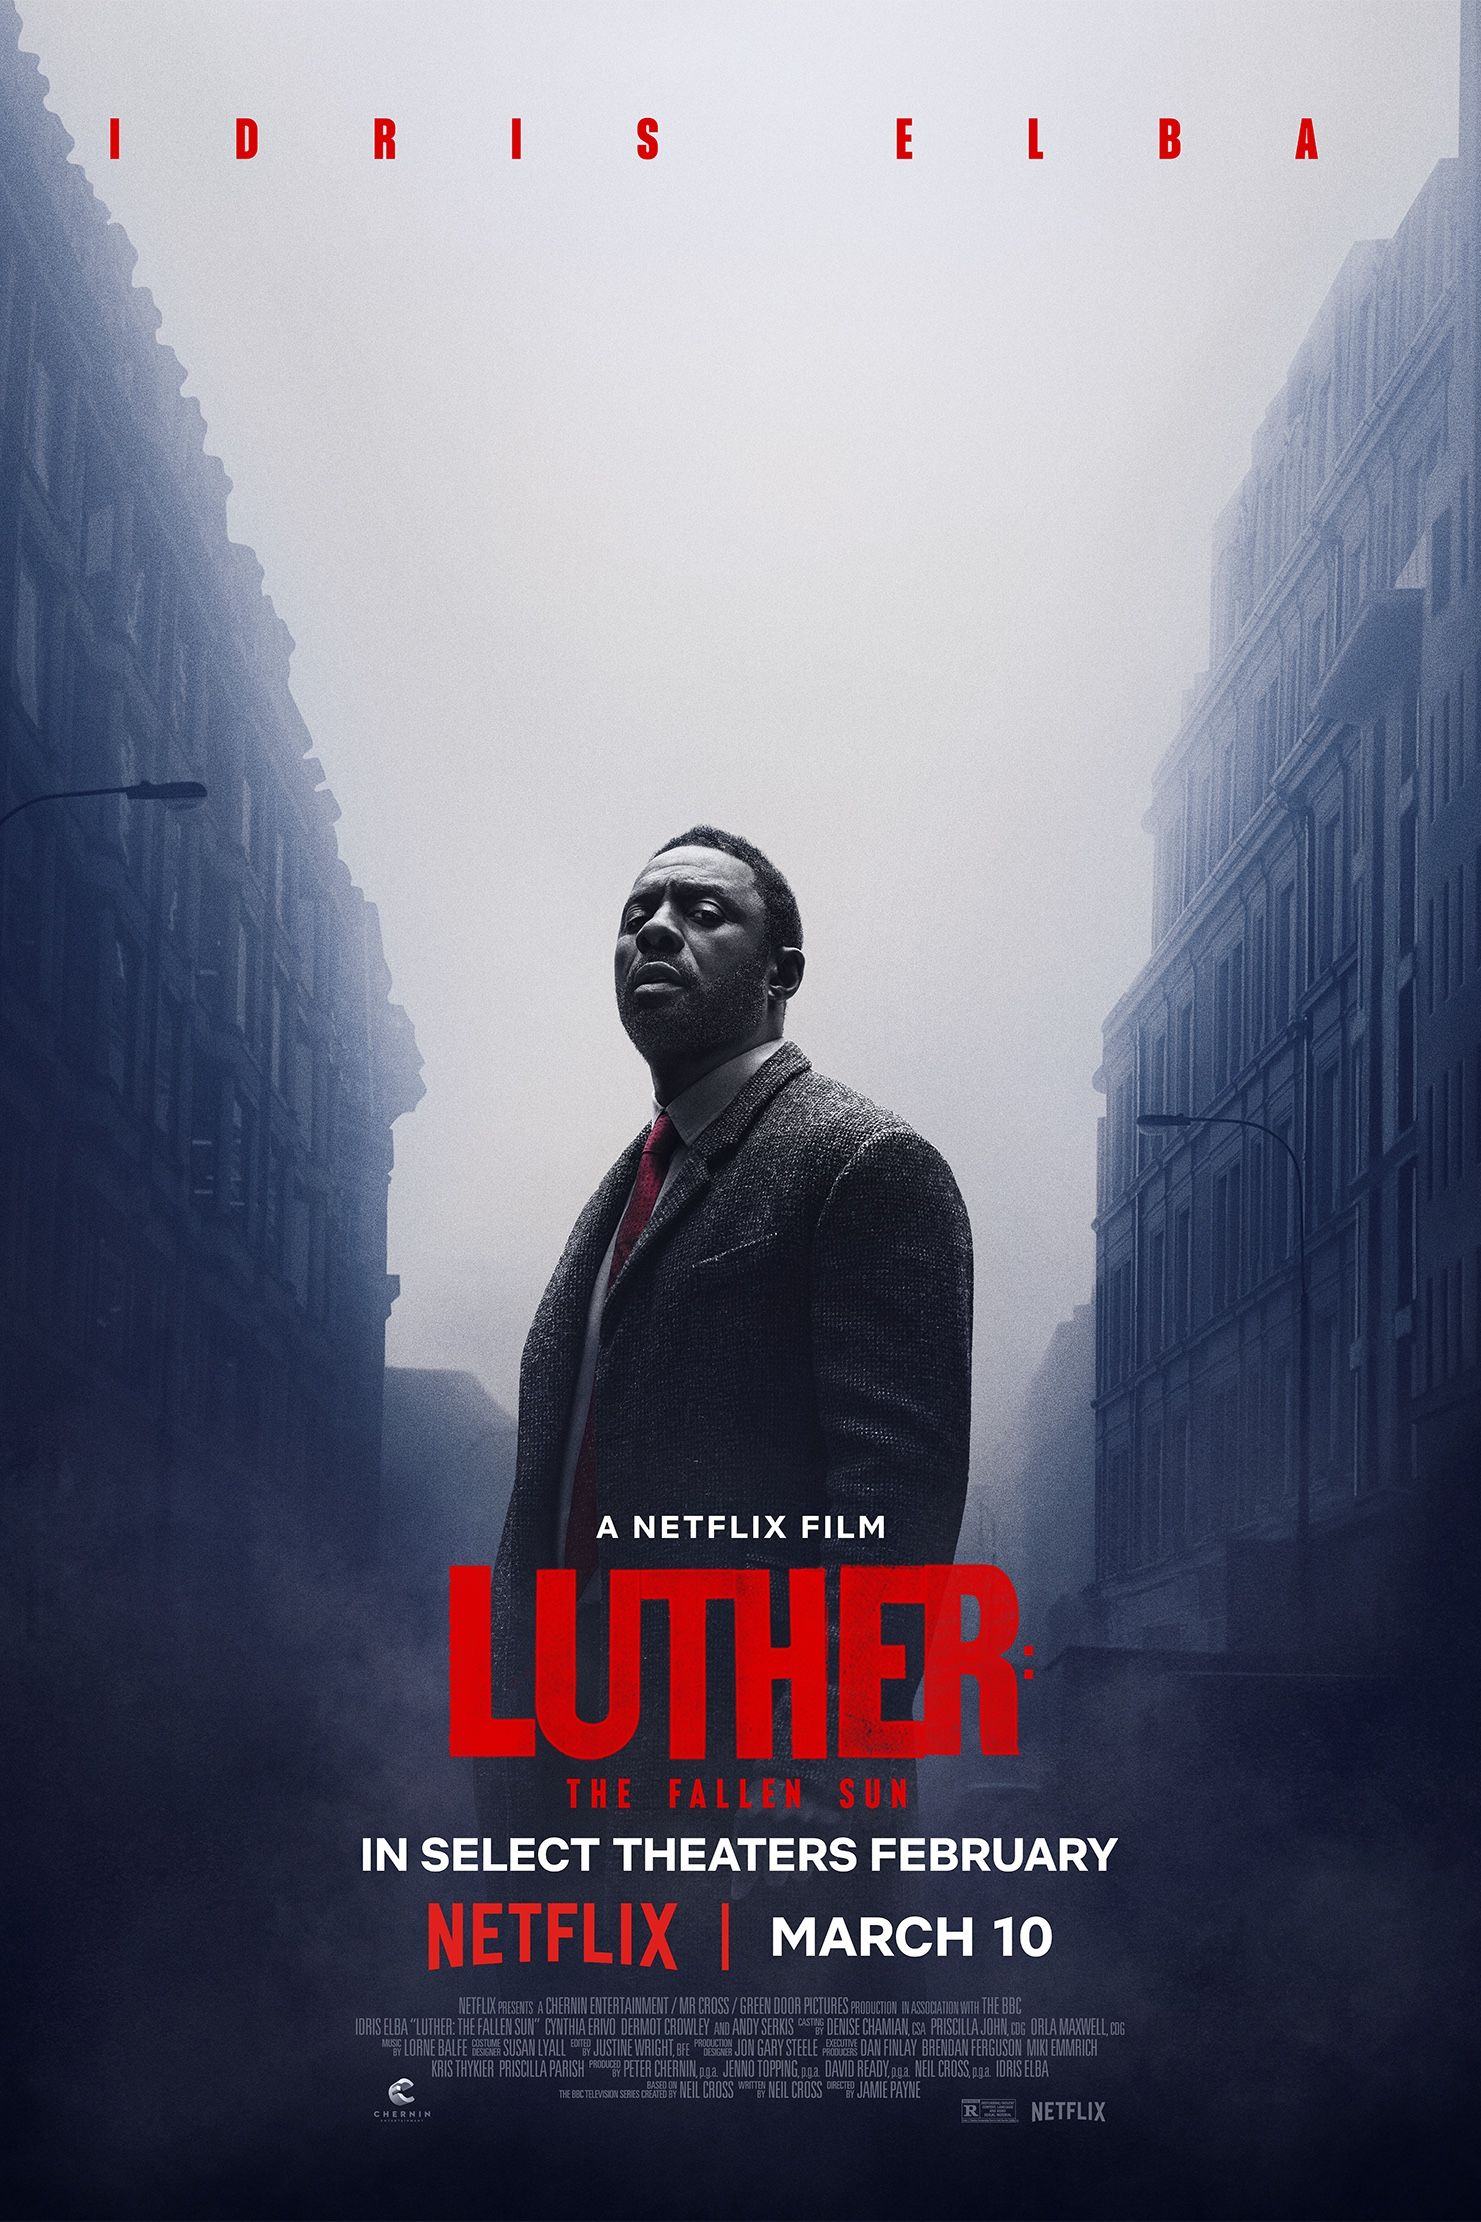 Luther's Falling Sun Netflix Poster